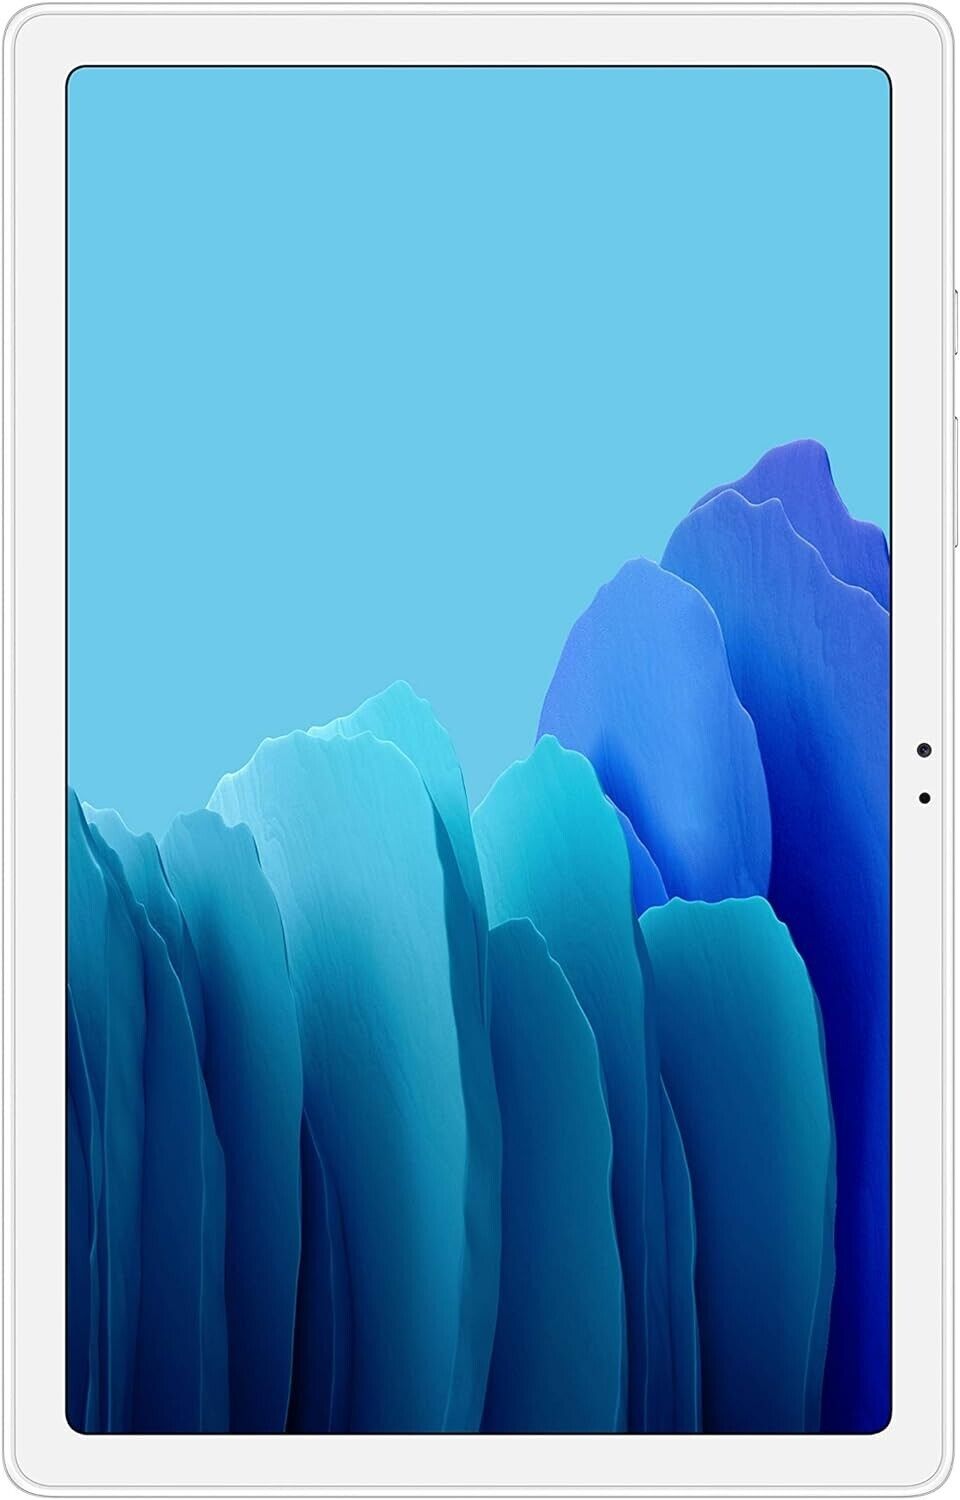 Samsung Galaxy Tab A7 (2020) Wi-Fi 32GB Silver EUROPEAN - Excellent Condition